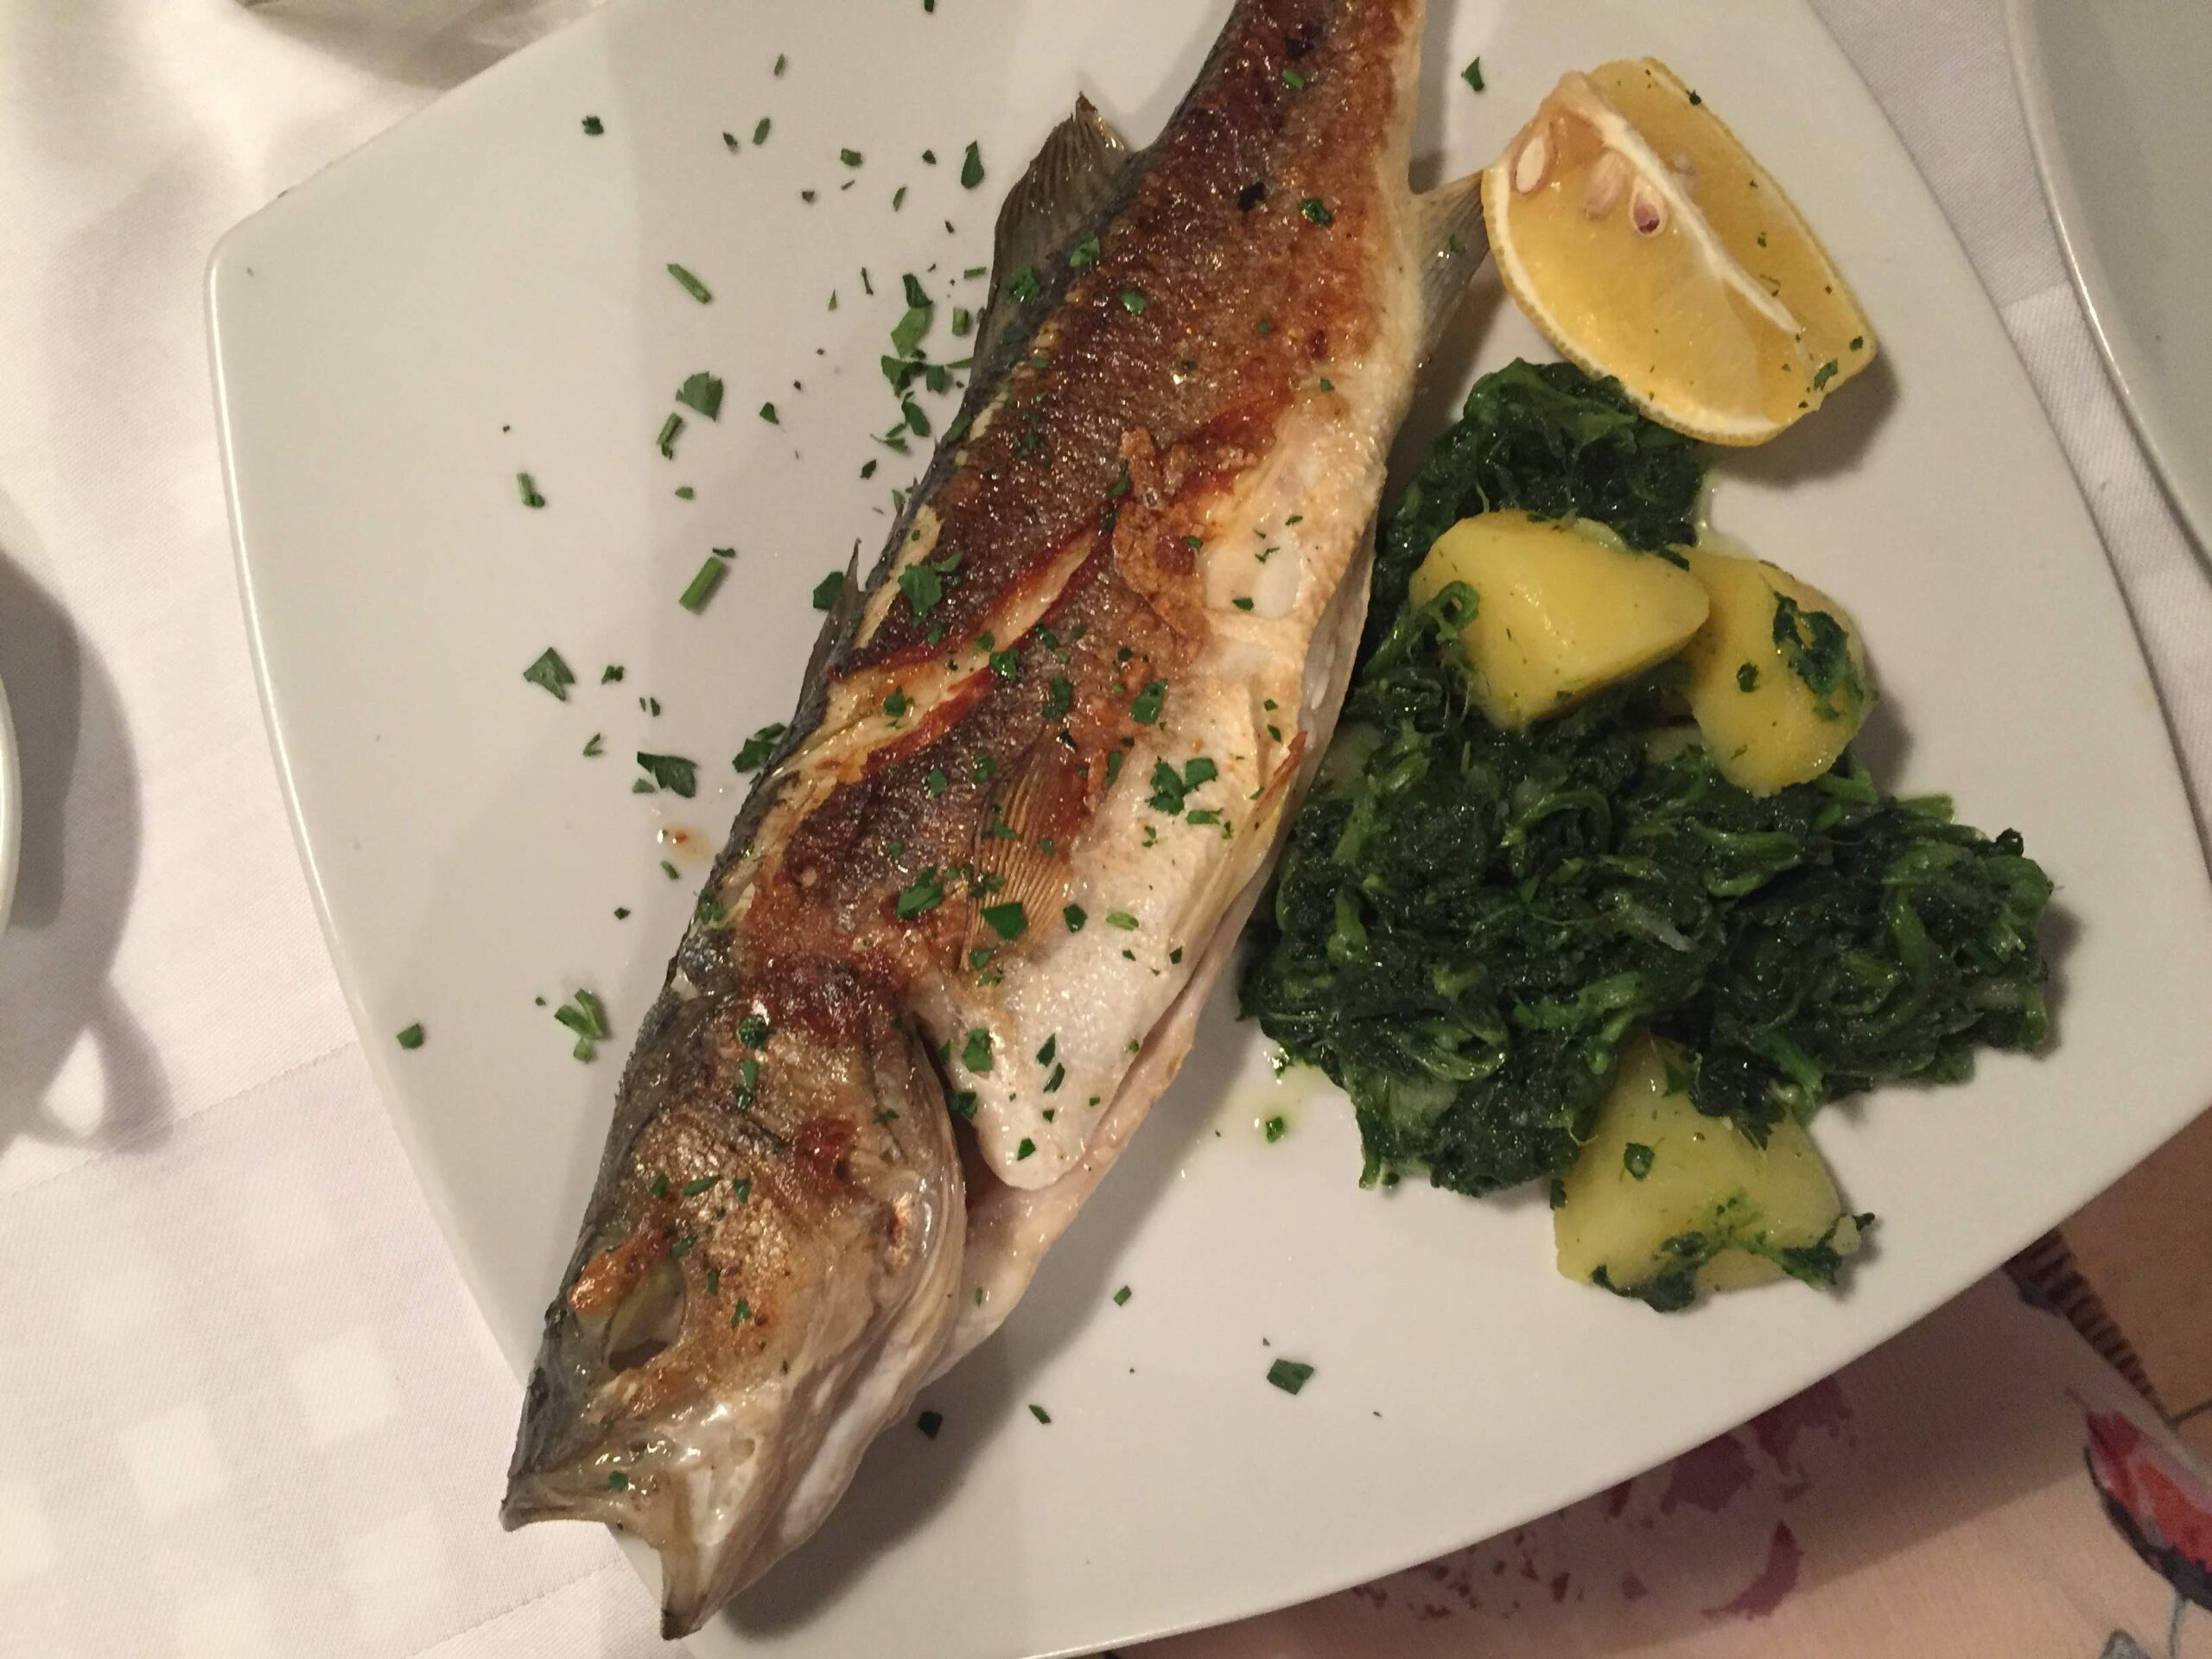 Grilled fish dinner in Split, Croatia